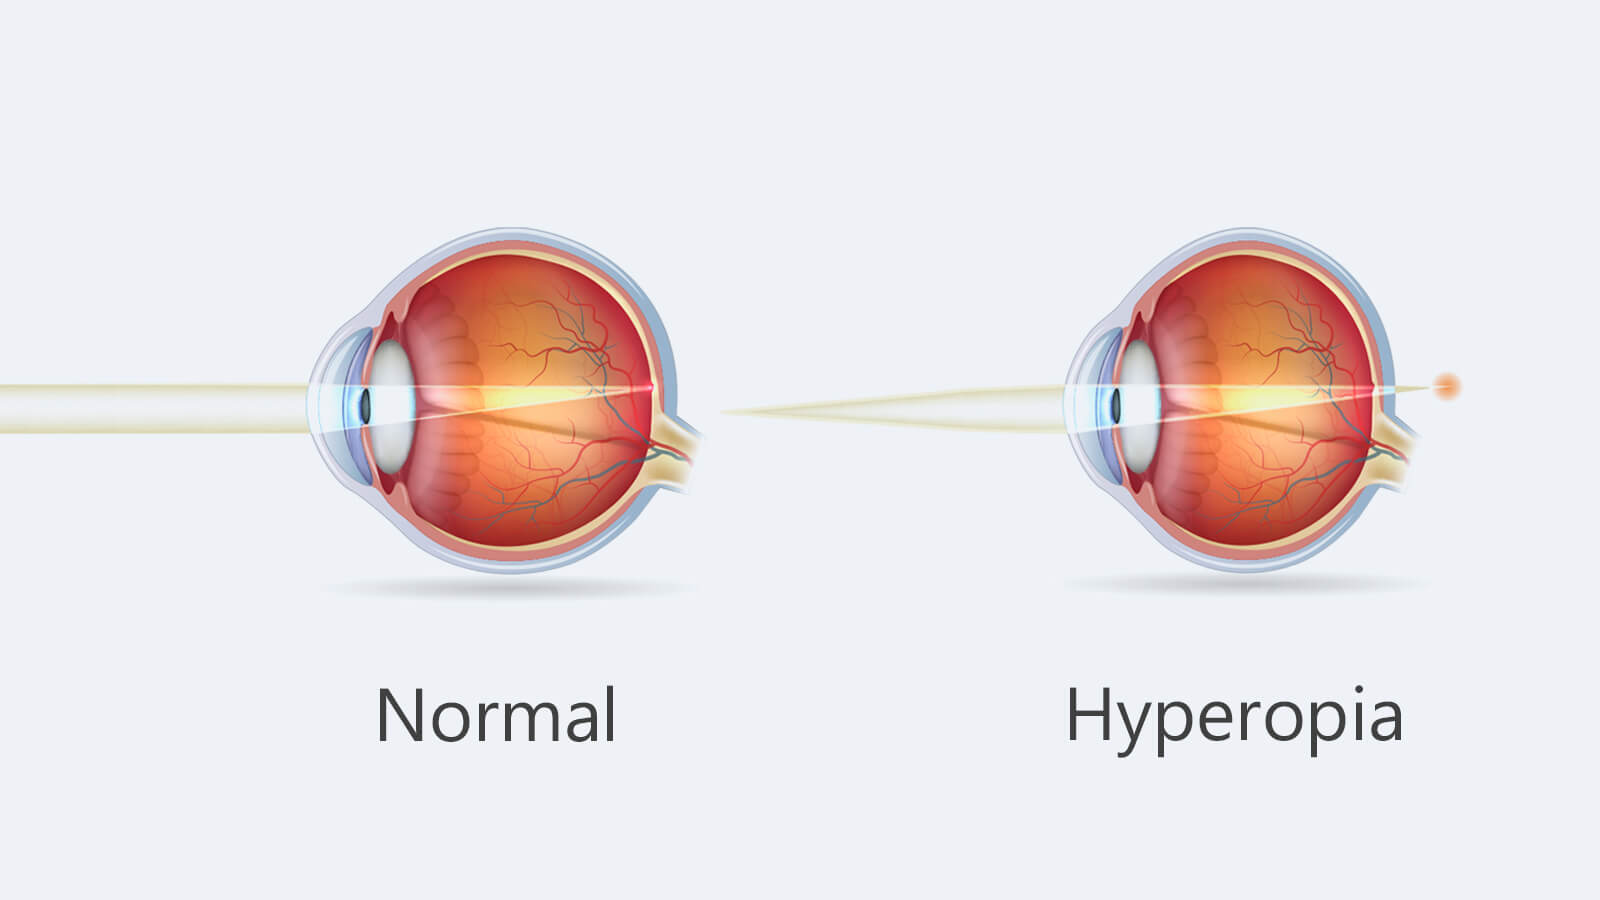 myopia hyperopia and astigmatism explained)